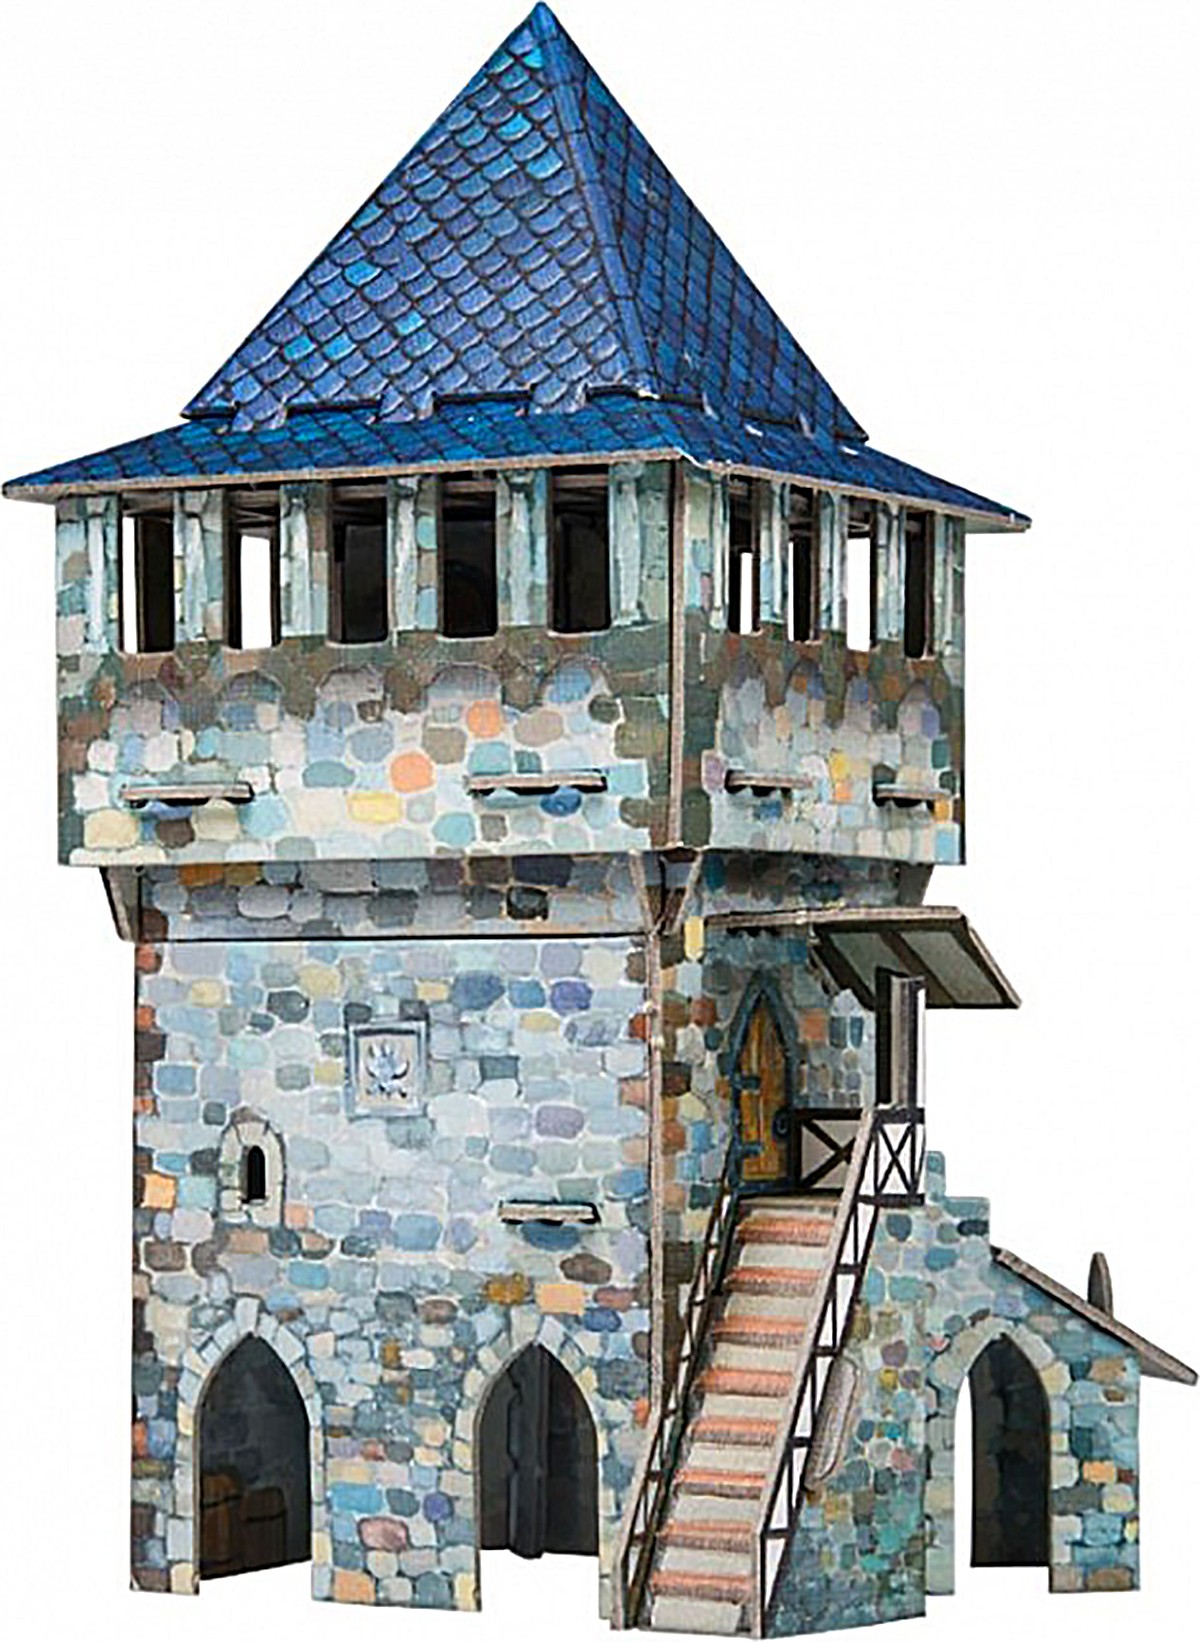 3d Puzzle KARTONMODELLBAU Papier Modell Geschenk Idee Spielzeug Oberer Turm TOP TOWER